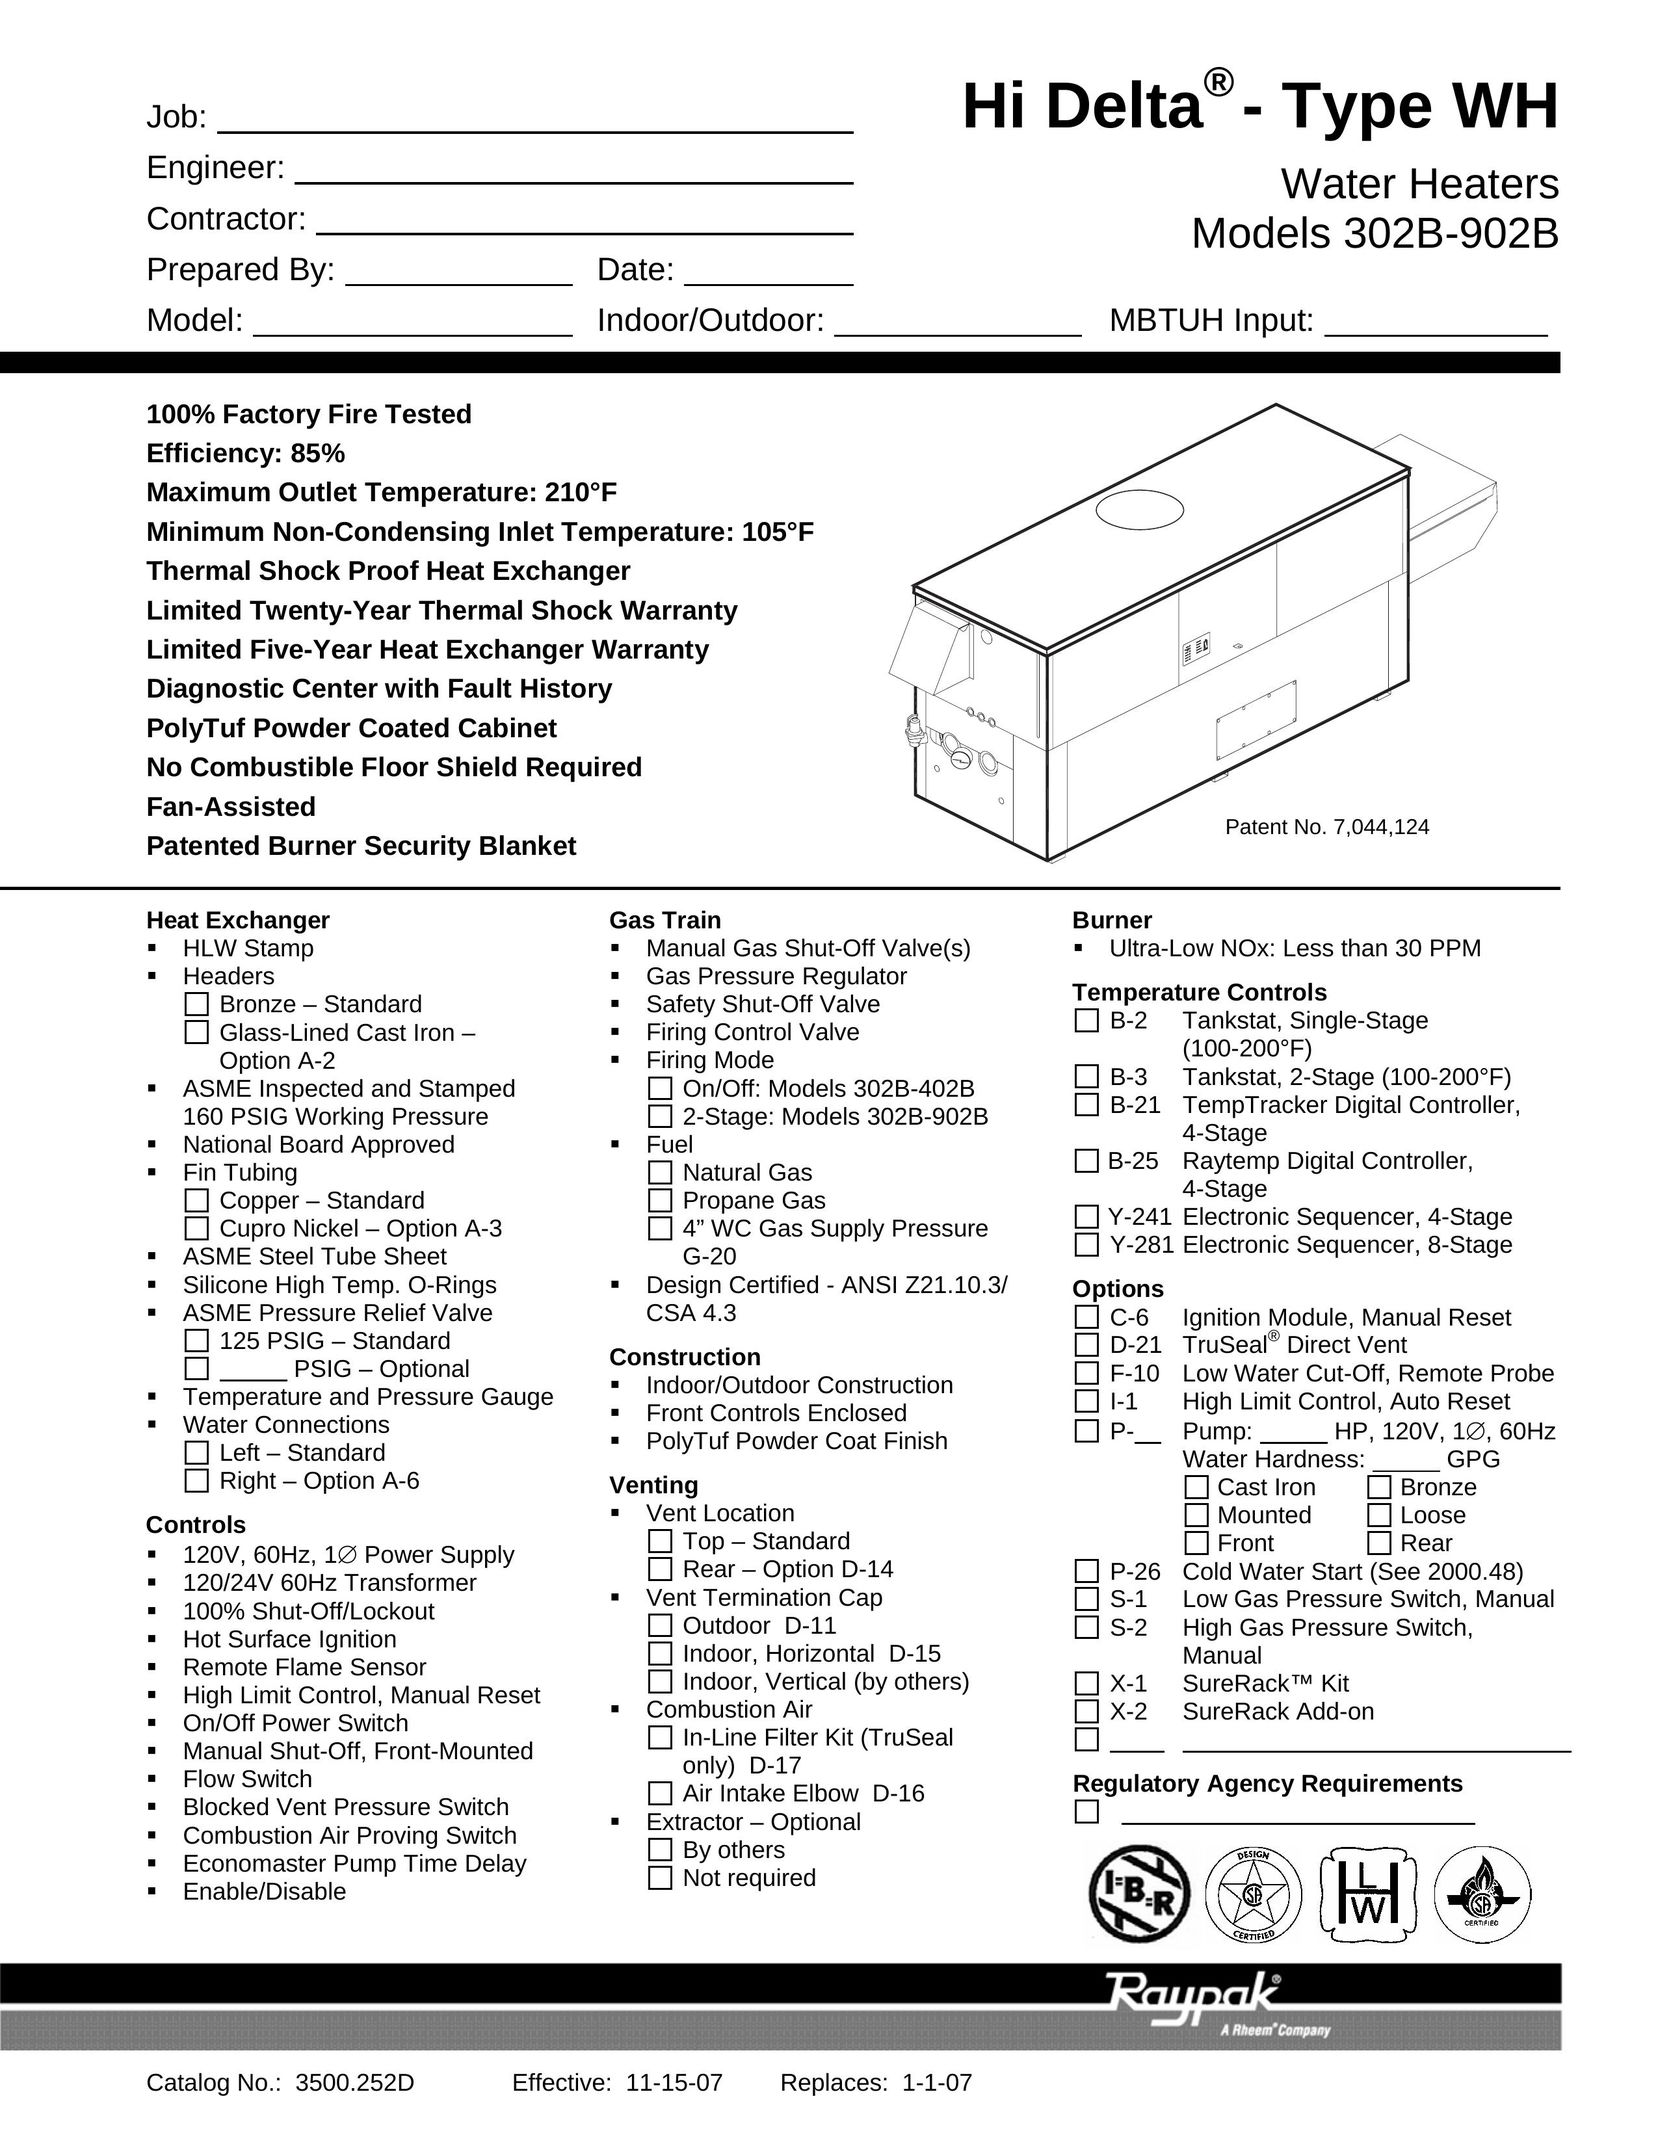 Raypak 302B-902B Water Heater User Manual